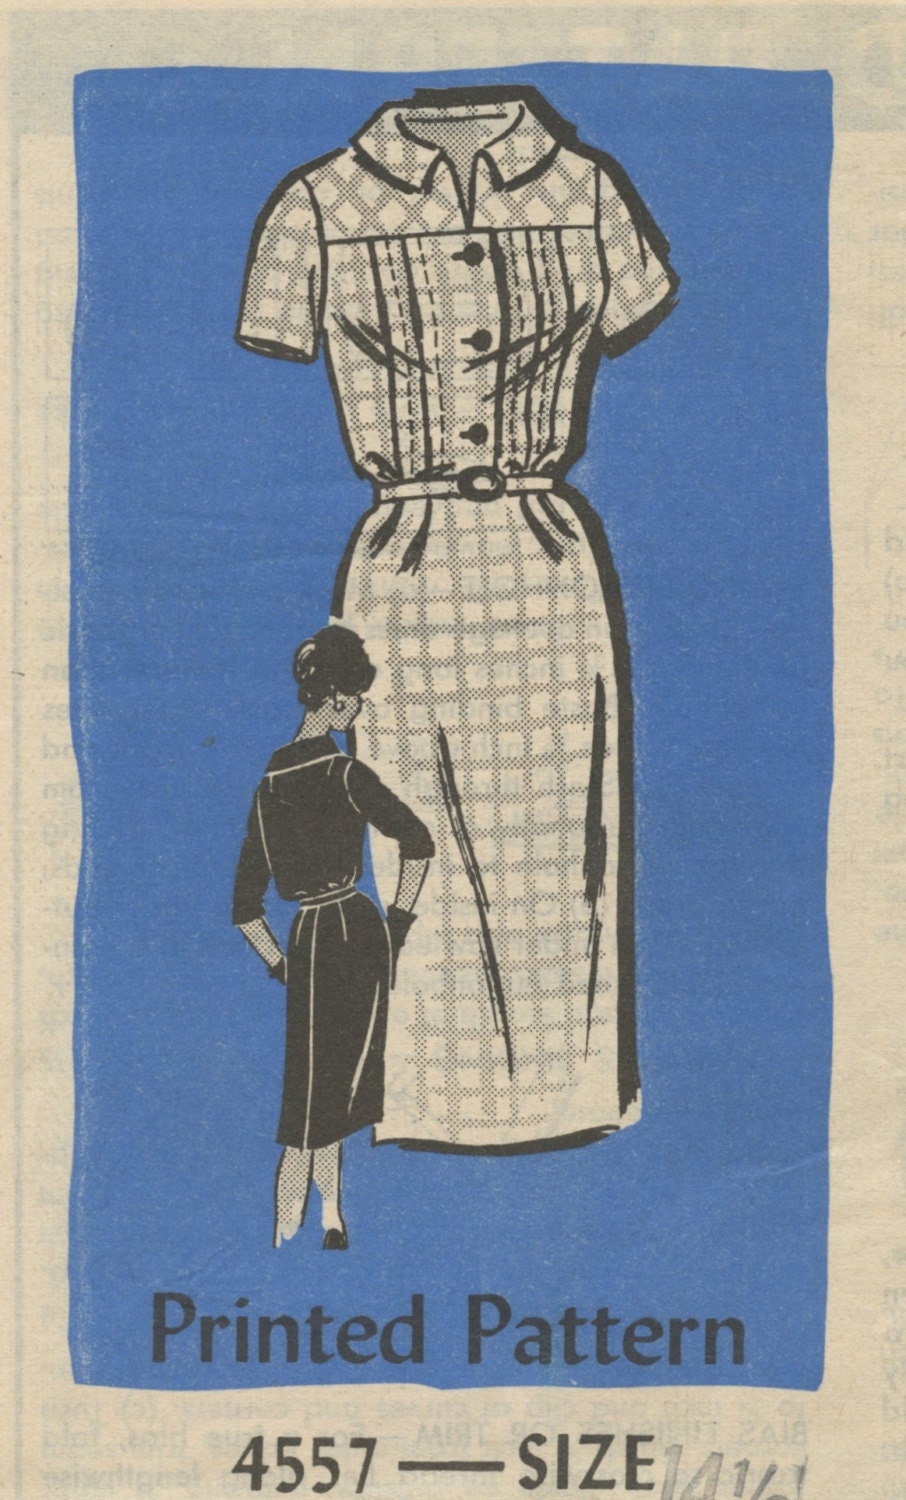 1950s Mccall's 4016 UNCUT Vintage Sewing Pattern Girl's Shirtwaist Dress,  Full Skirt Dress Size 4, Size 6 -  Canada